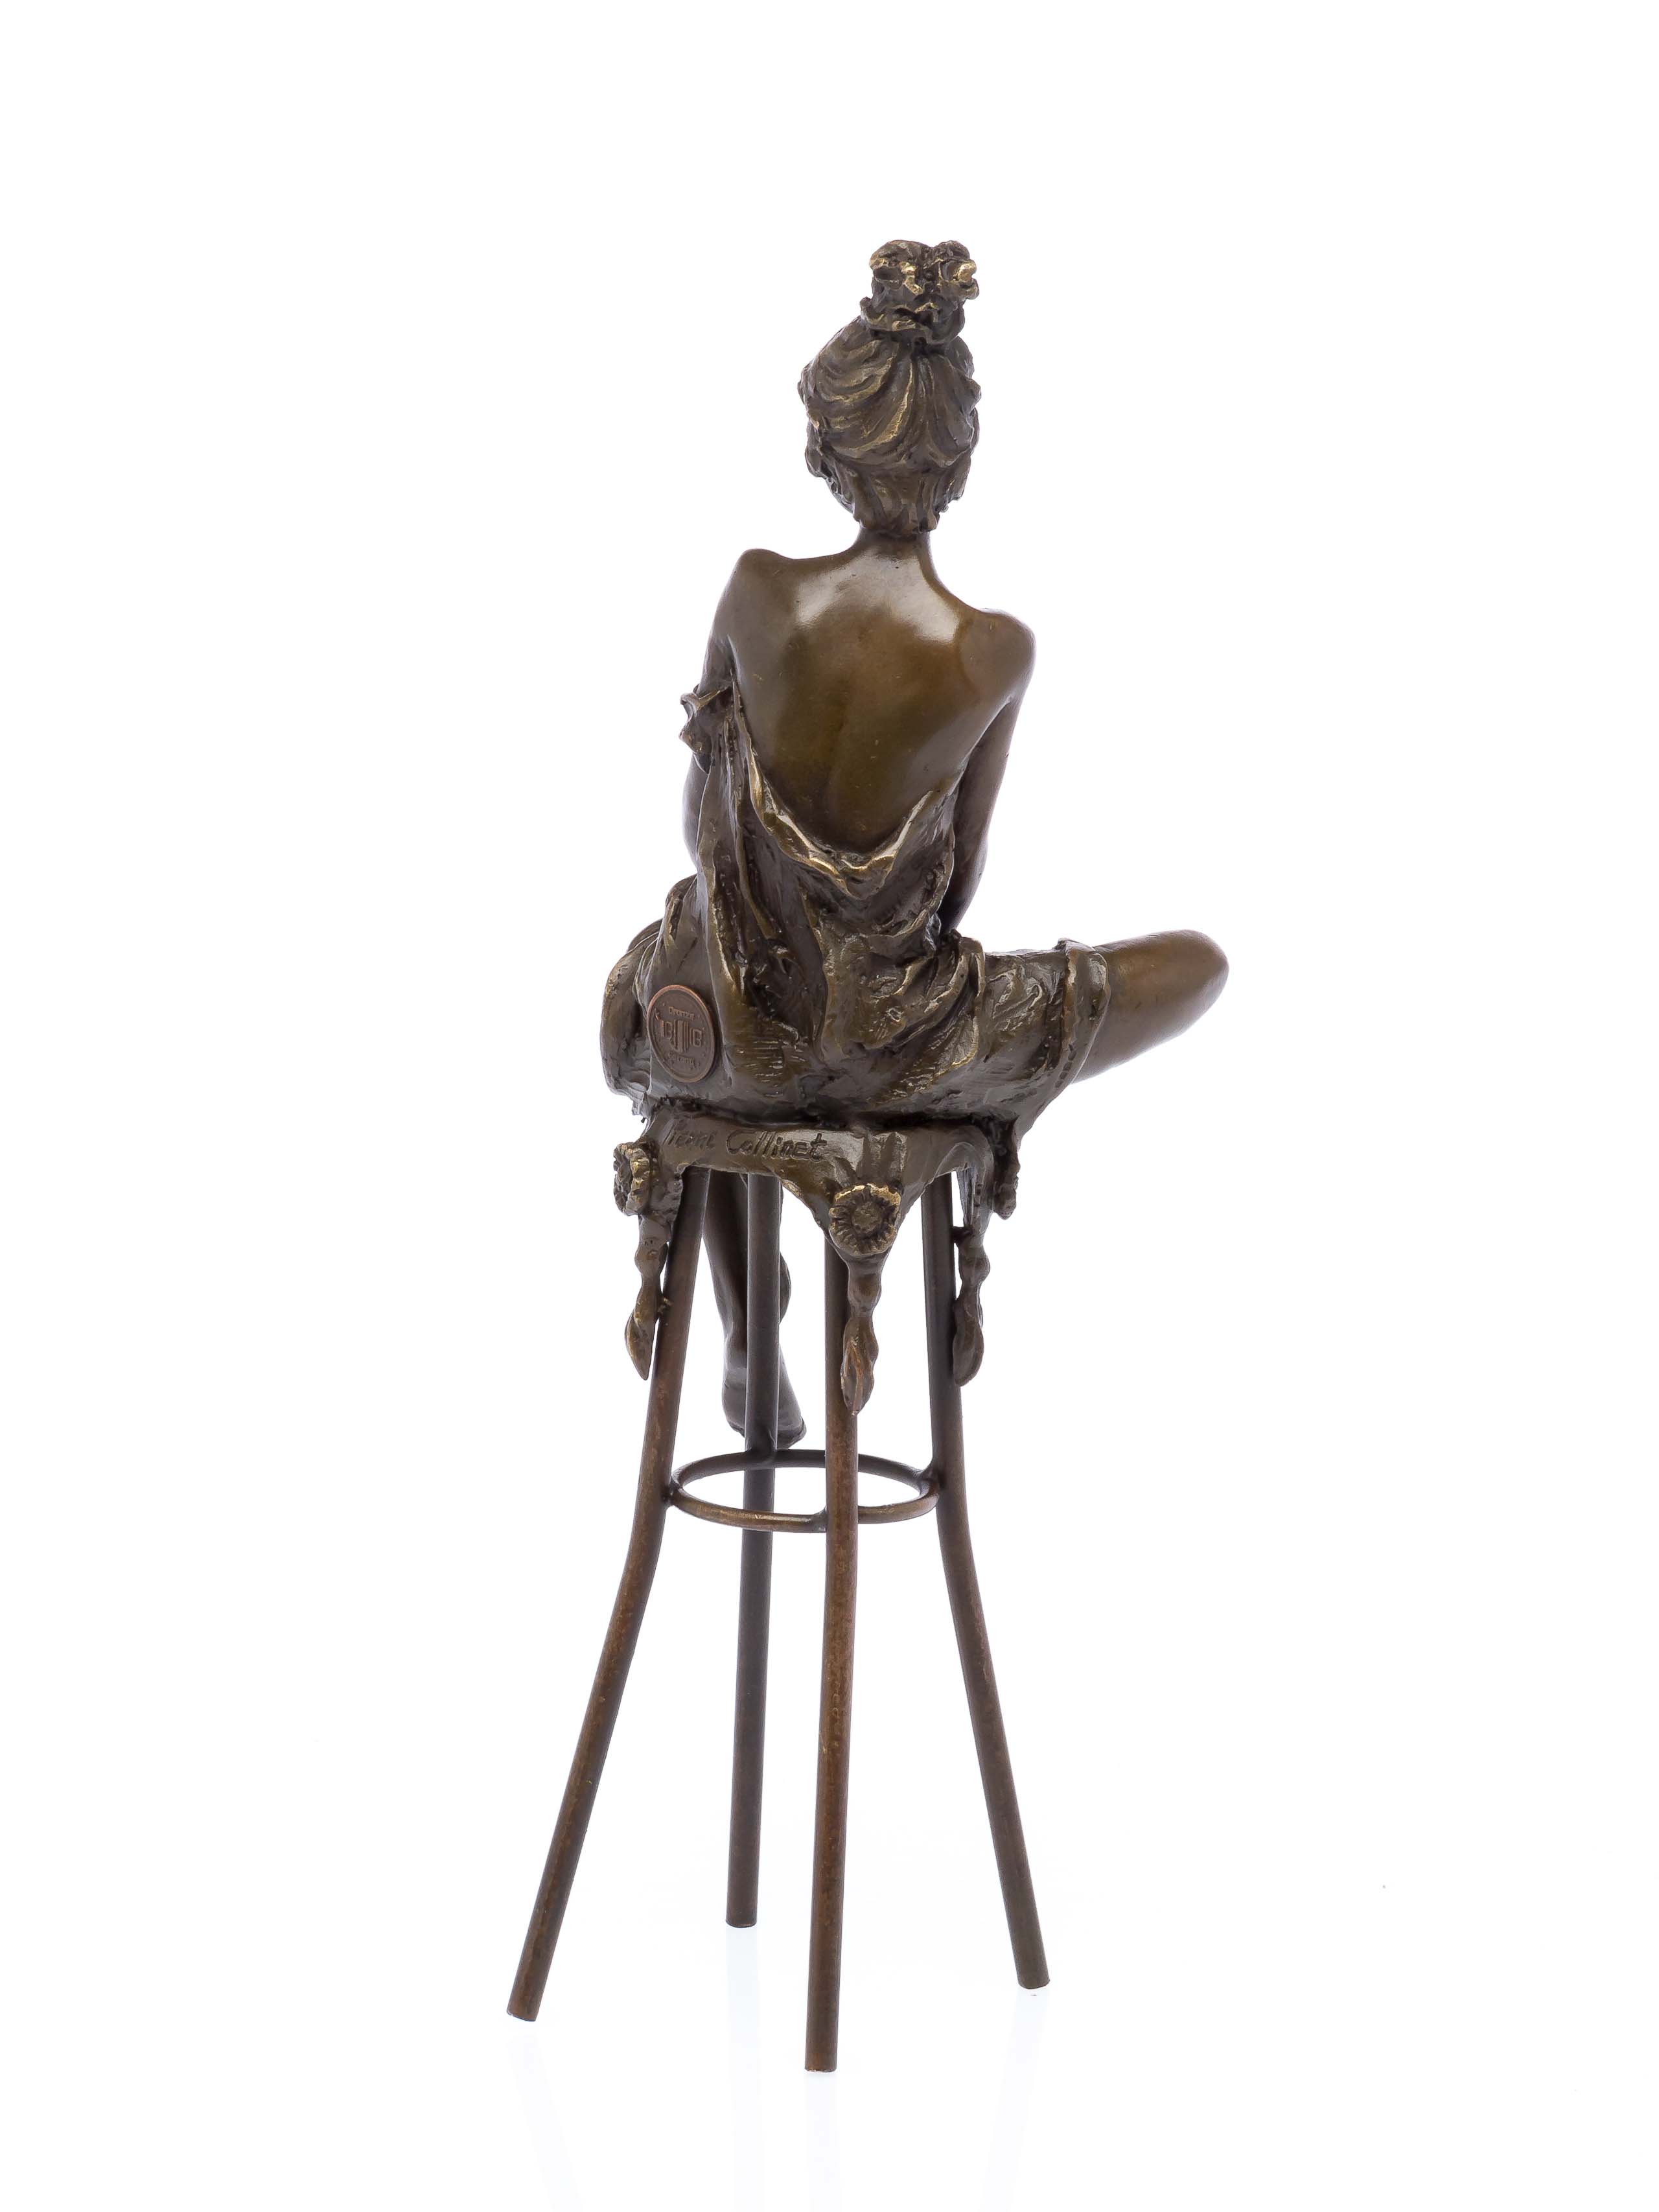 Bronzeskulptur Frau auf Barhocker Bronze Barfrau Figur Skulptur sculpture woman 